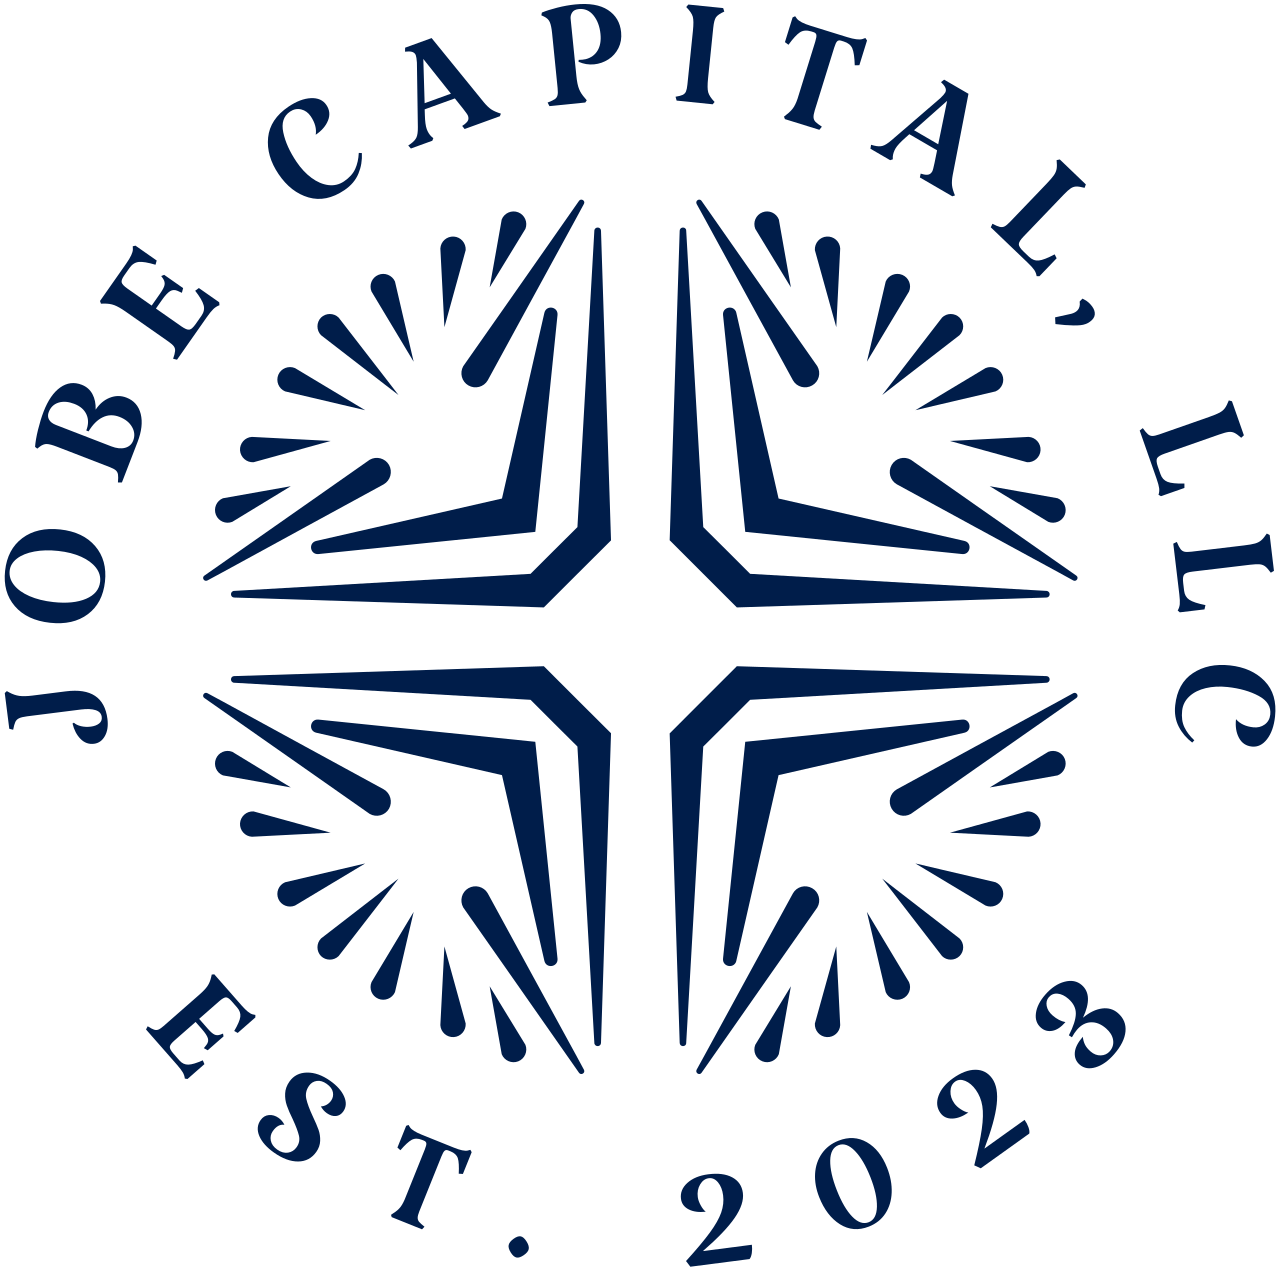 JOBE CAPITAL, LLC's web page